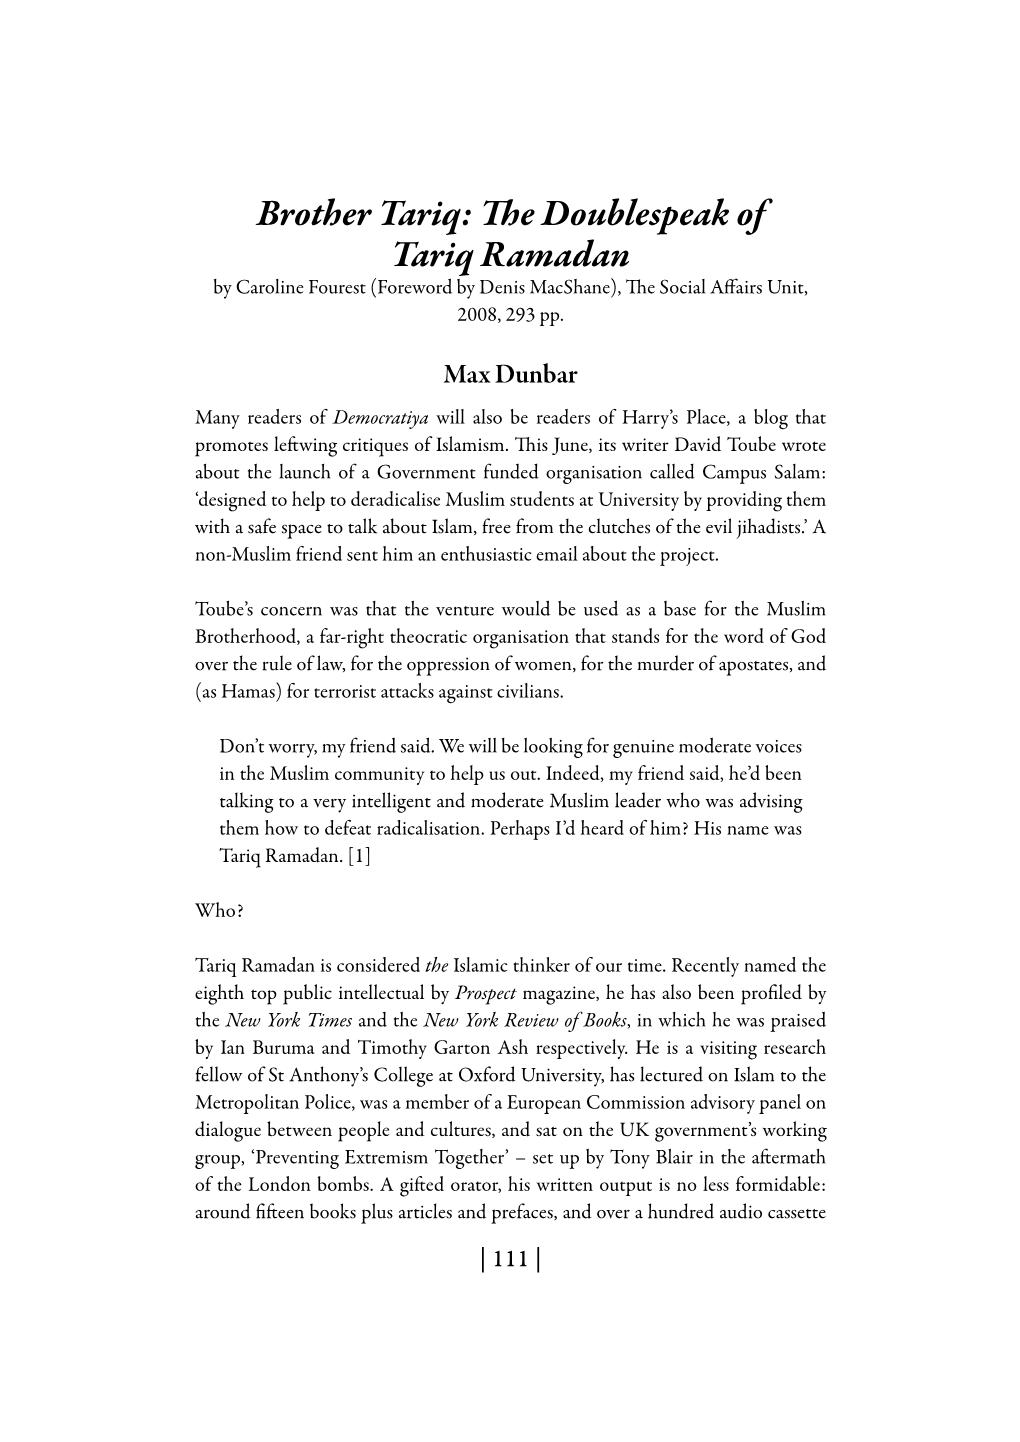 The Doublespeak of Tariq Ramadan by Caroline Fourest (Foreword by Denis Macshane), the Social Affairs Unit, 2008, 293 Pp